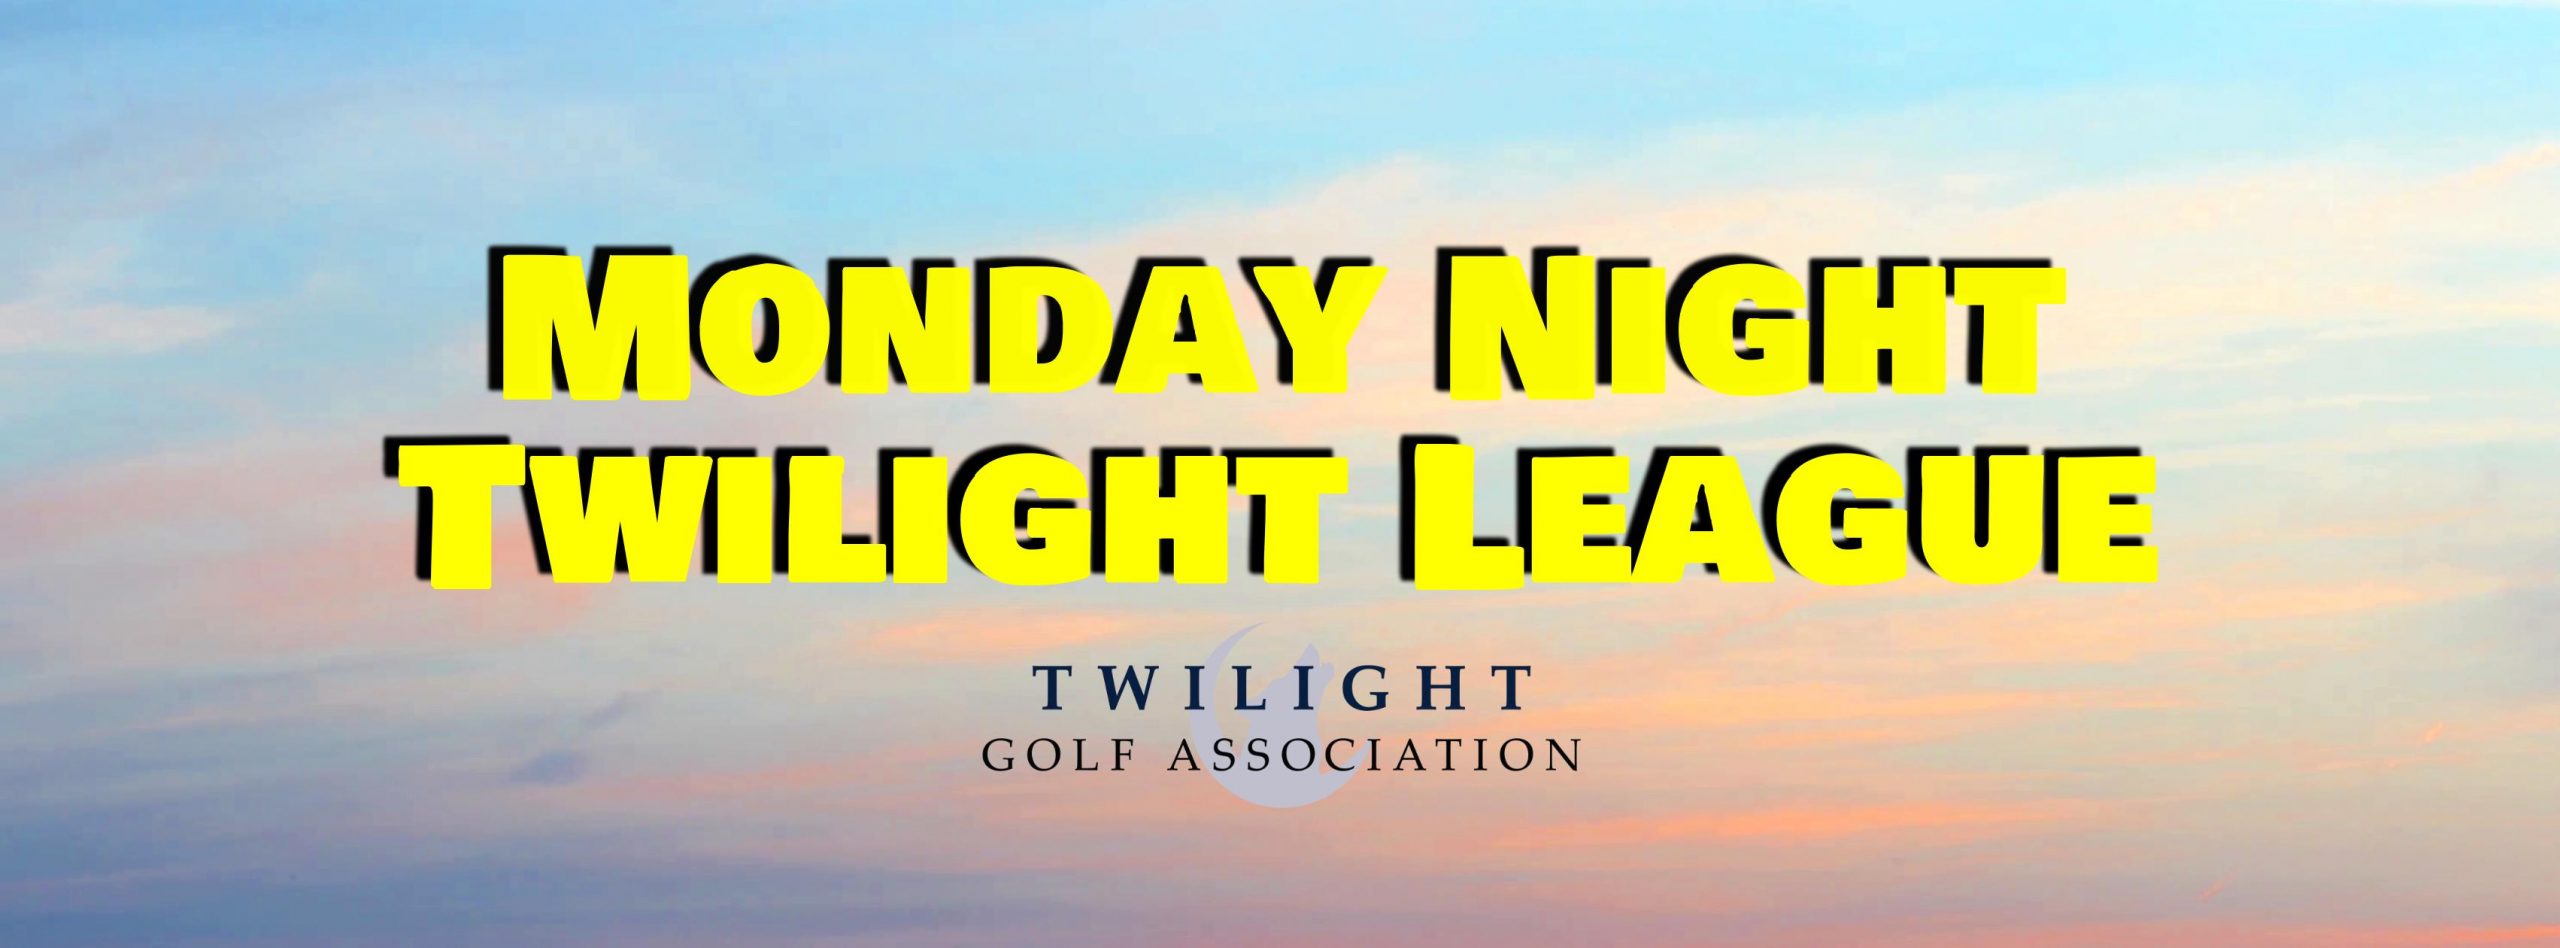 Monday Twilight League at Wetlands Golf Club